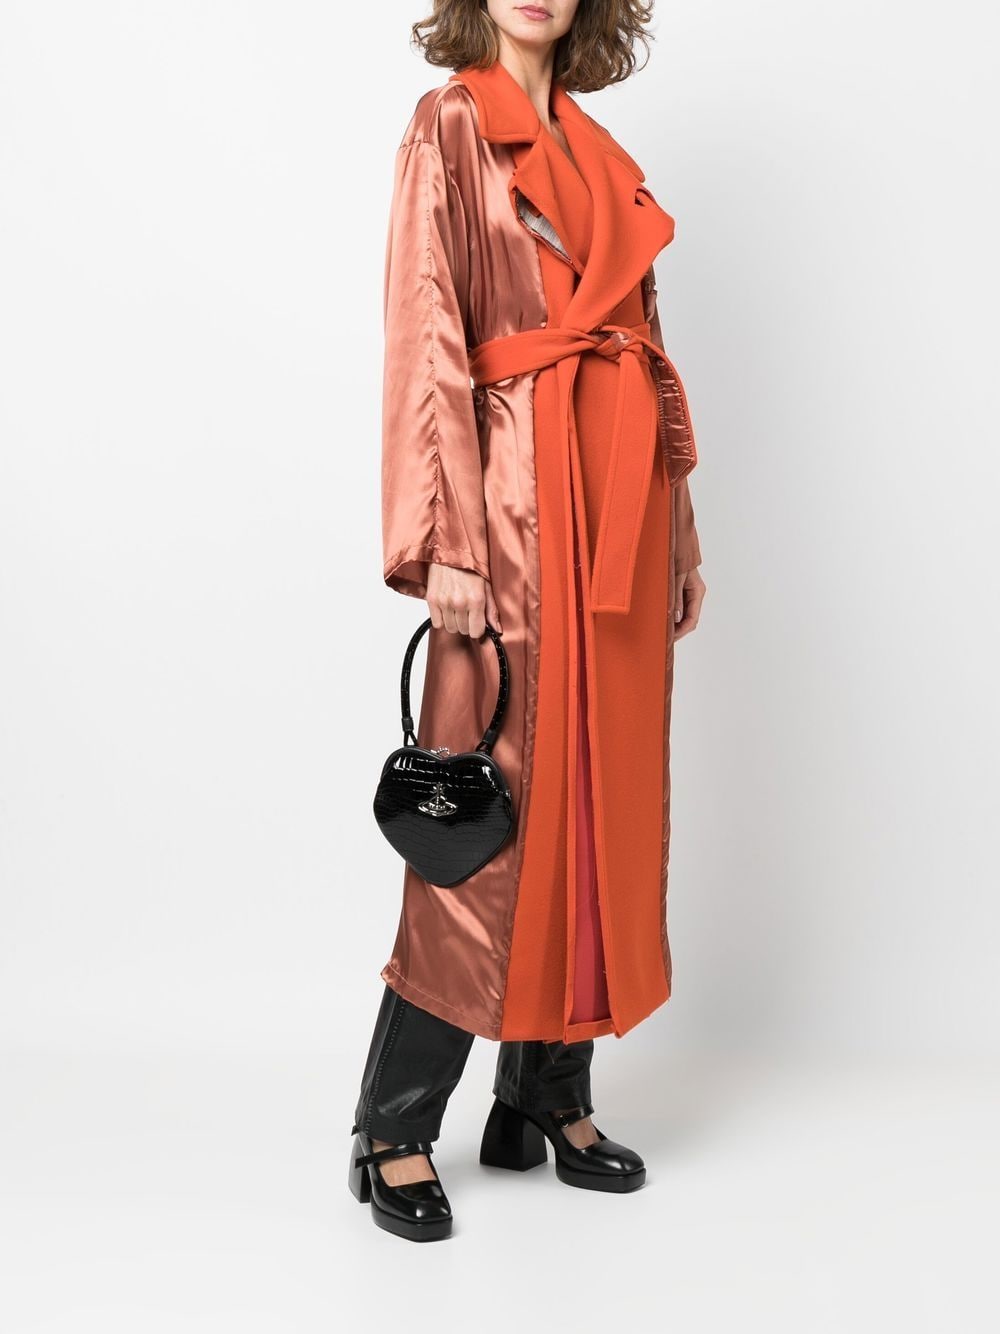 Vivienne Westwood: Orange New Heart Bag